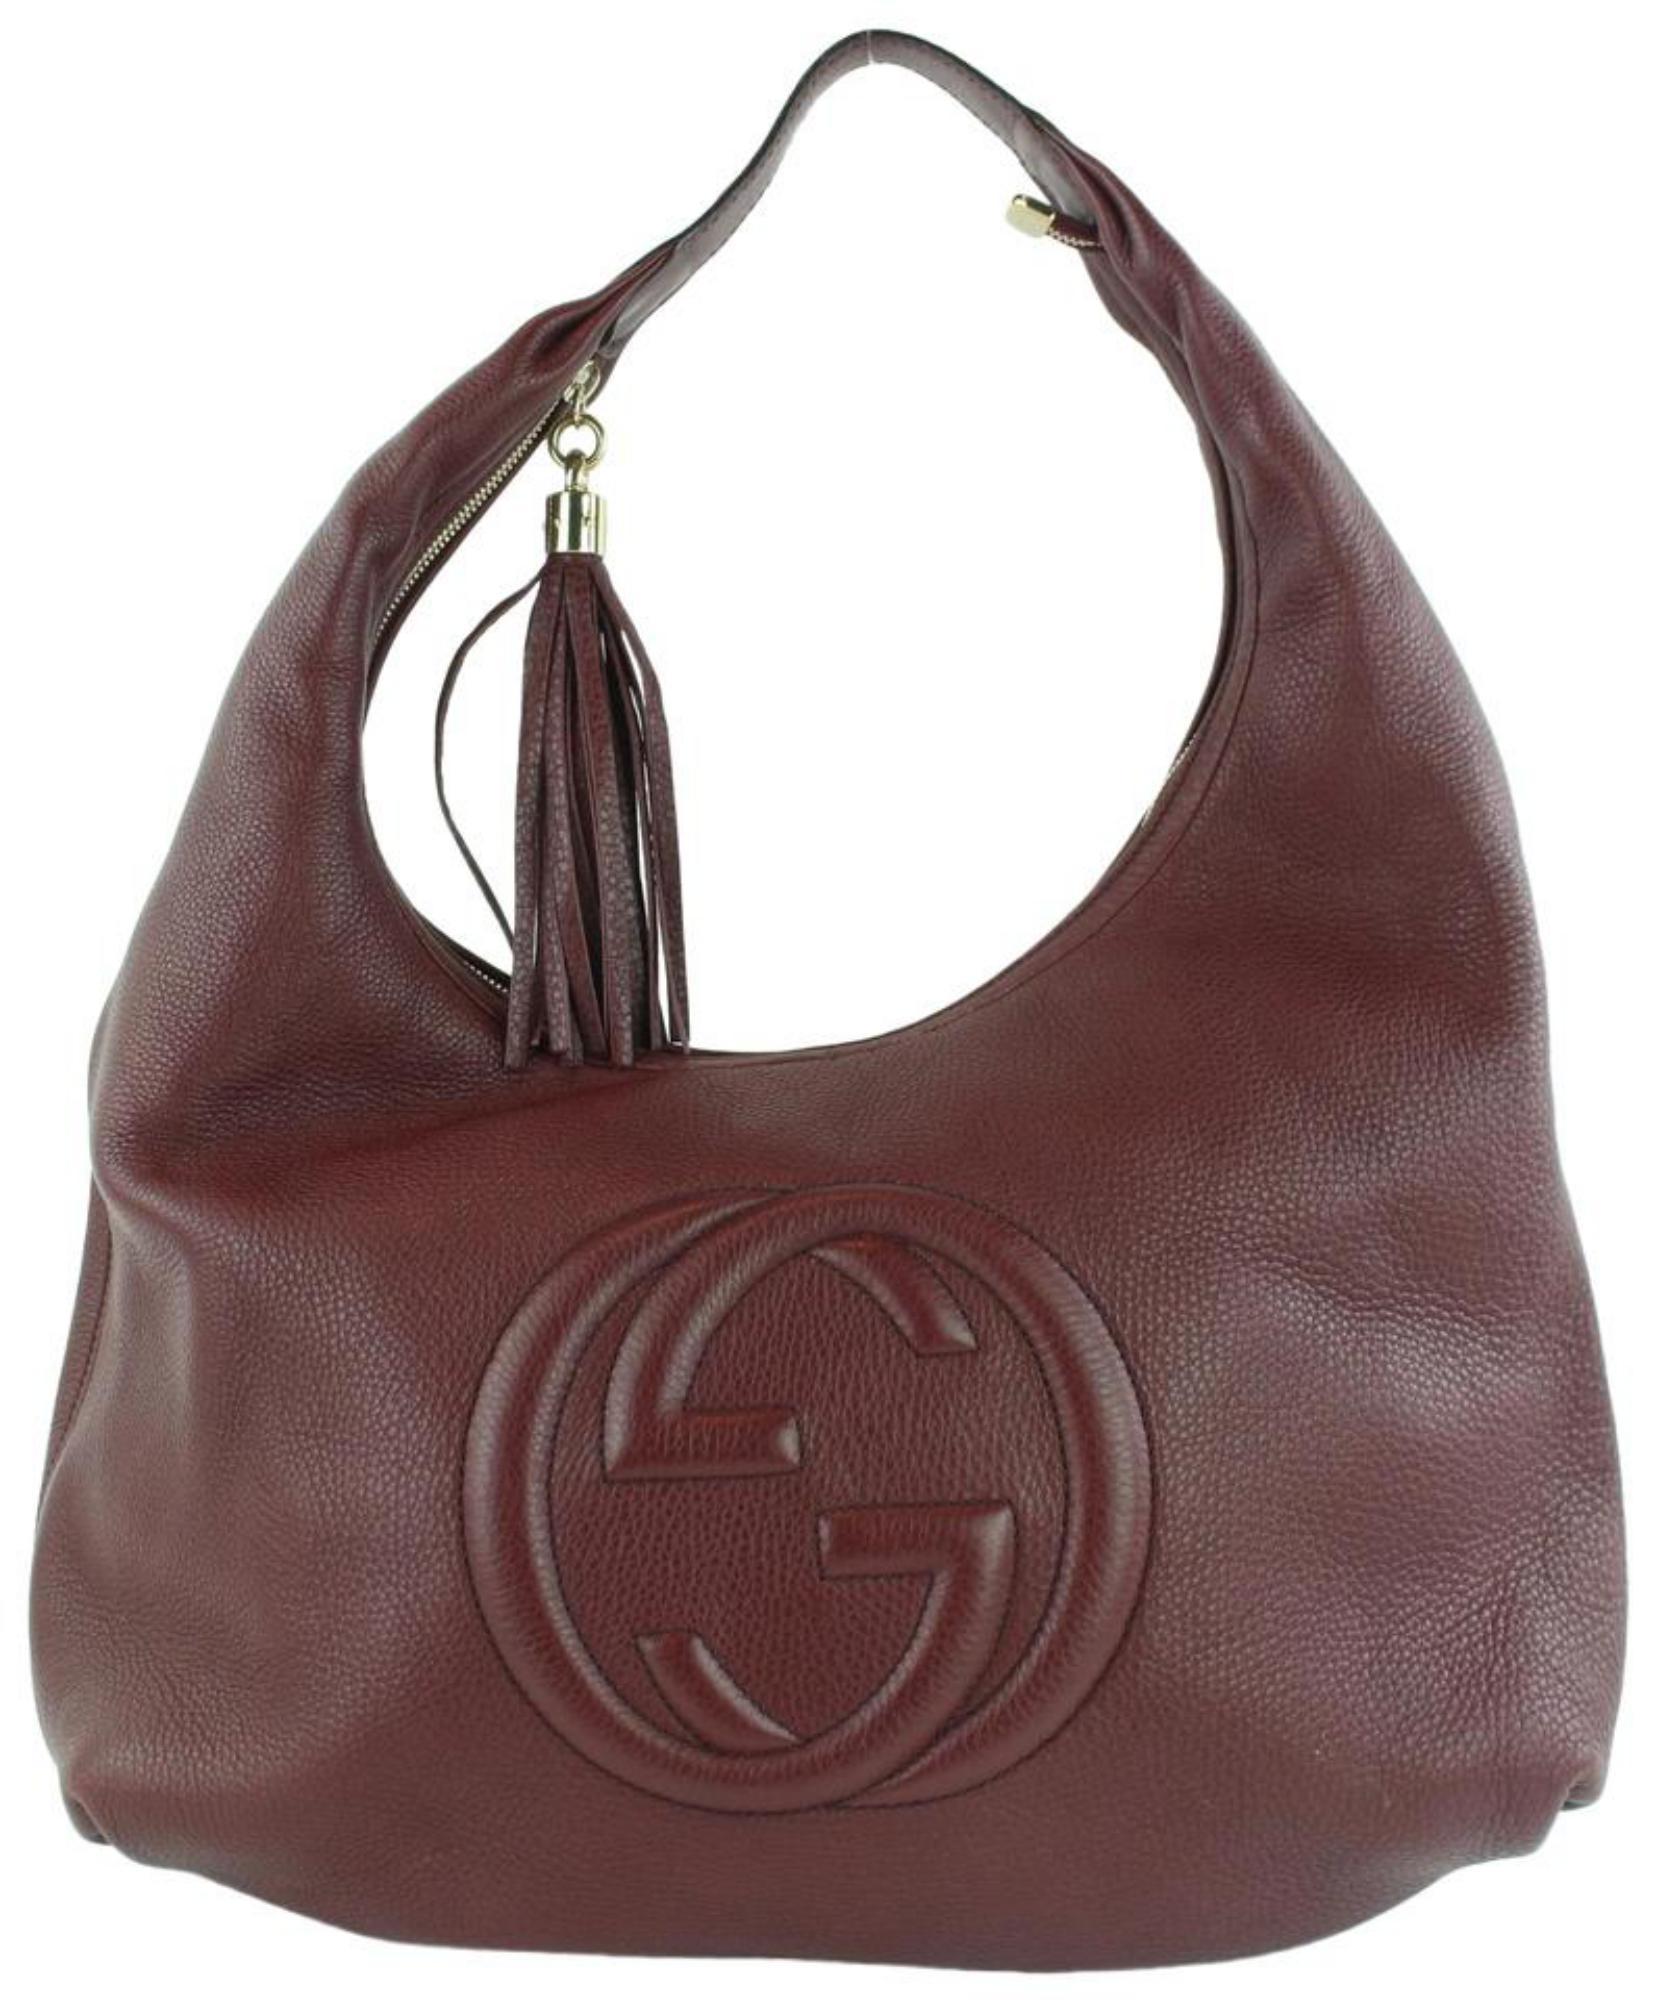 Gucci Soho Large Pebbled Calfskin 17gz1102 Burgundy Leather Hobo Bag For Sale